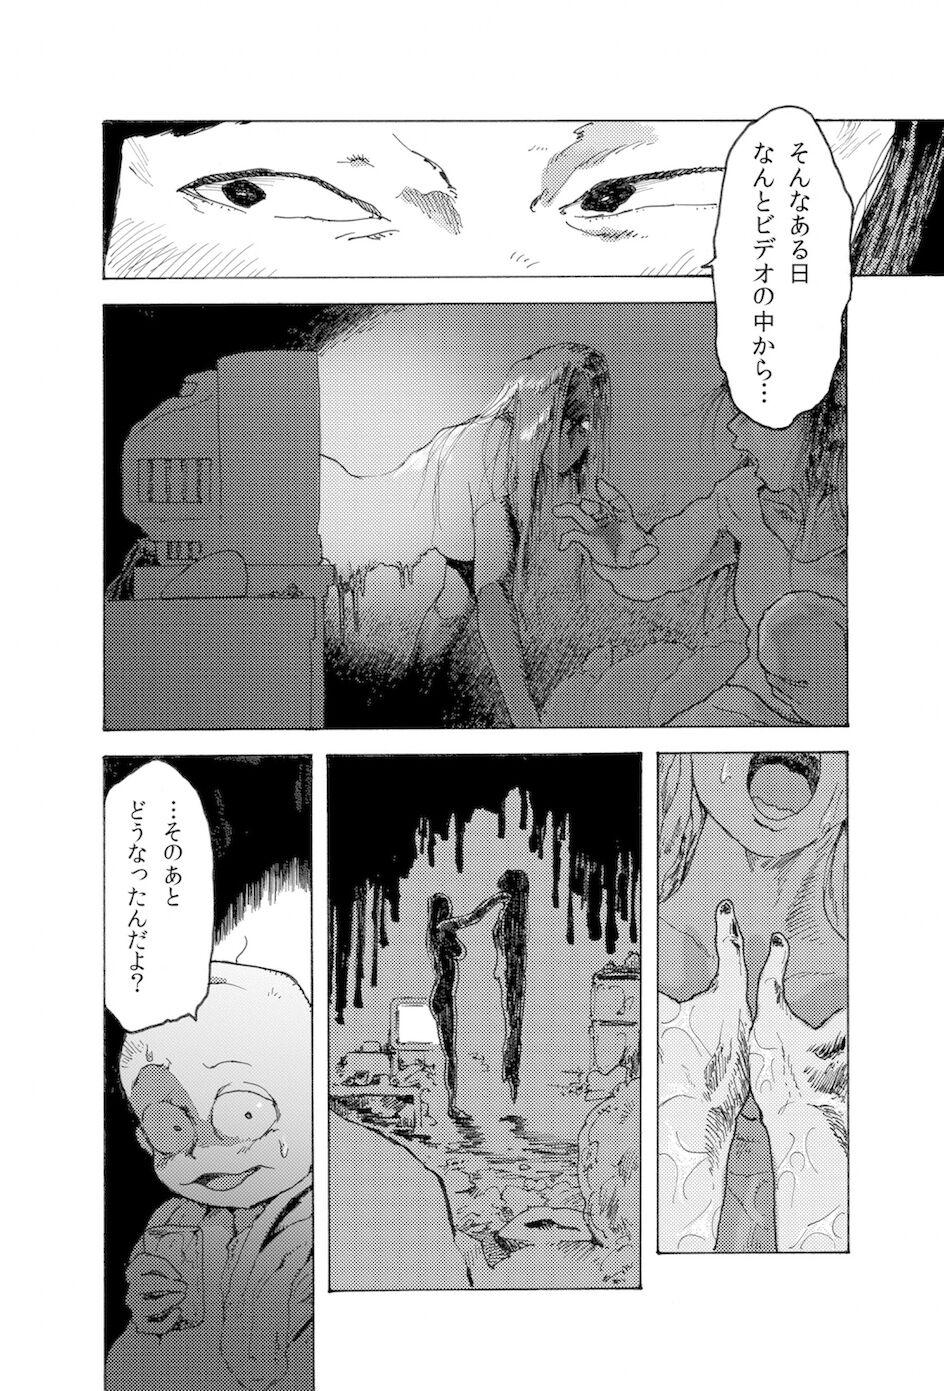 Follando [Koshigerunasunibusu] WEB Sairoku [R18G] 'AIN'T SIX IS DEATH' - Osomatsu-san Long - Picture 3